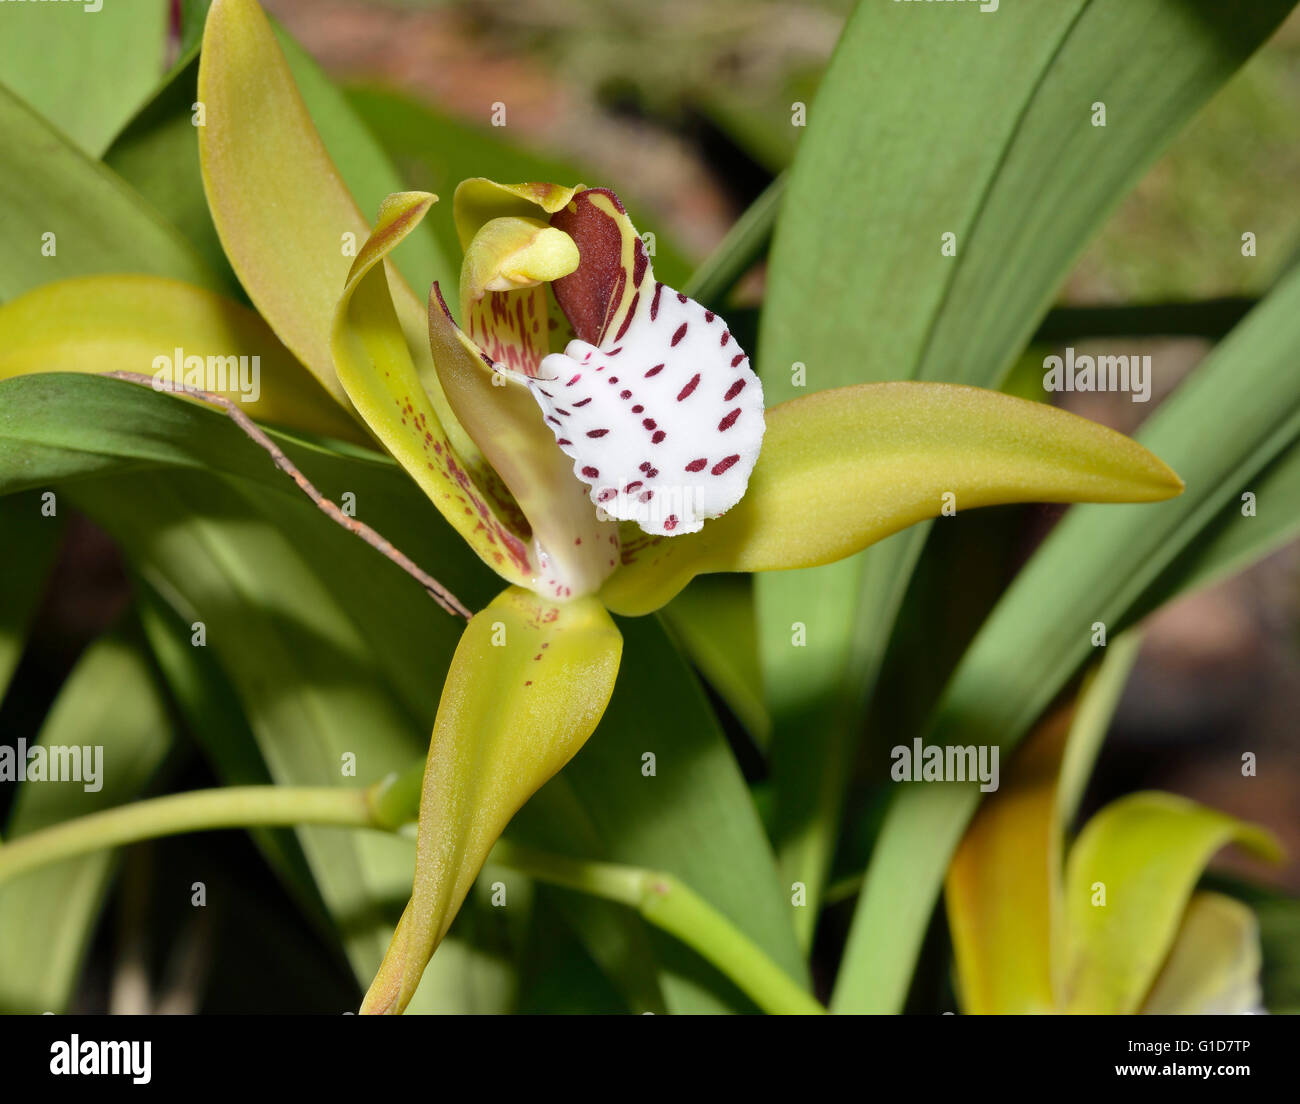 Orchidée Cymbidium à rayures de tigre - Cymbidium tigrinum du chinois de l'Himalaya, du Myanmar et de l'Assam en Inde Banque D'Images